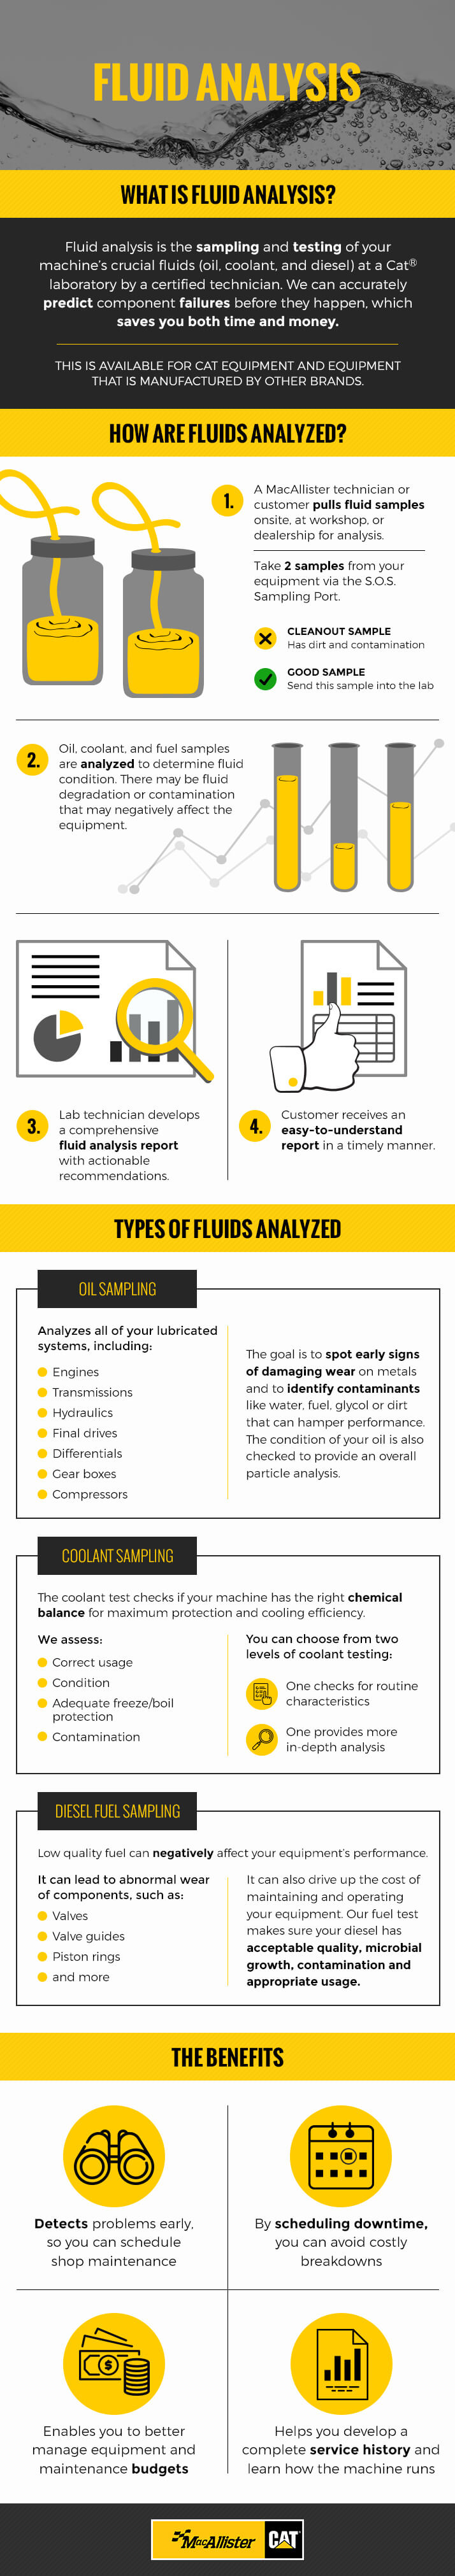 fluid analysis